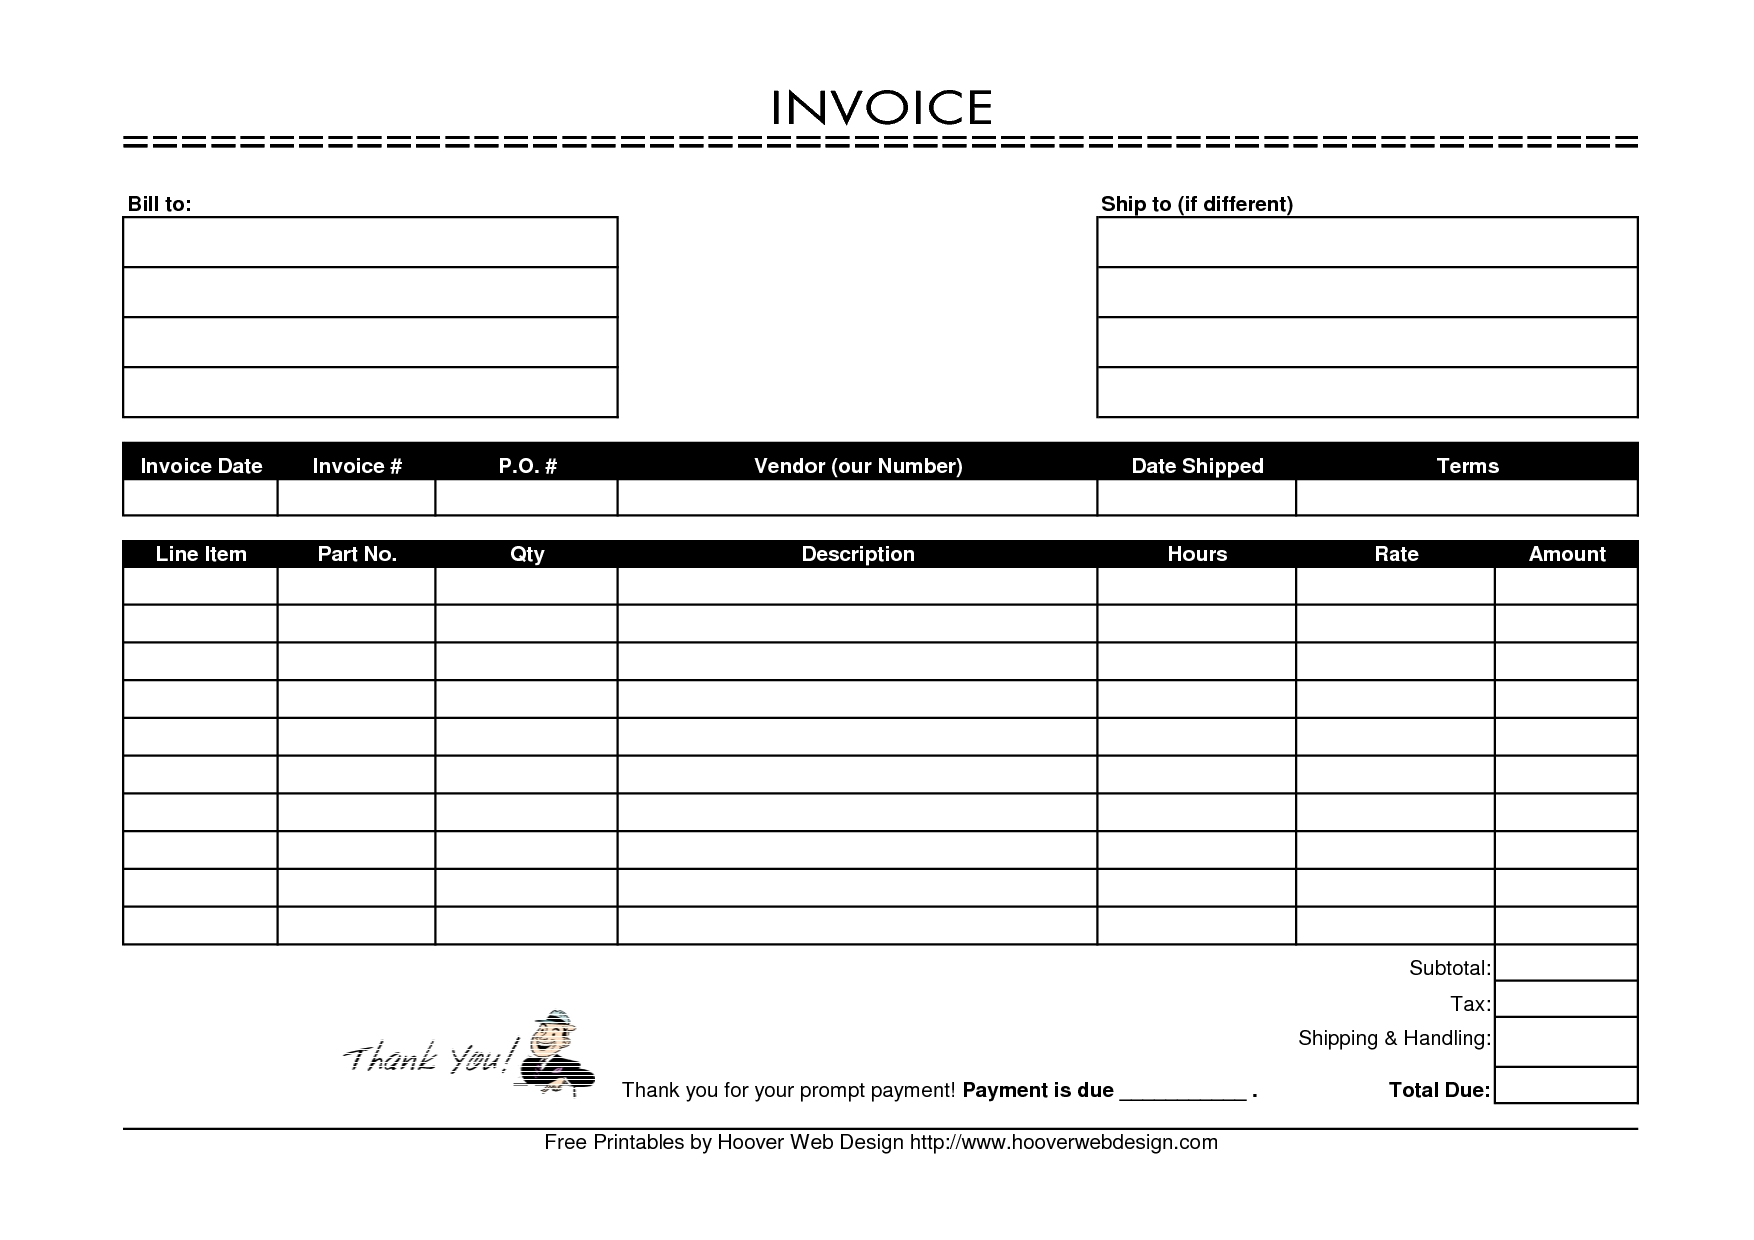 drive-invoice-template-invoice-template-ideas